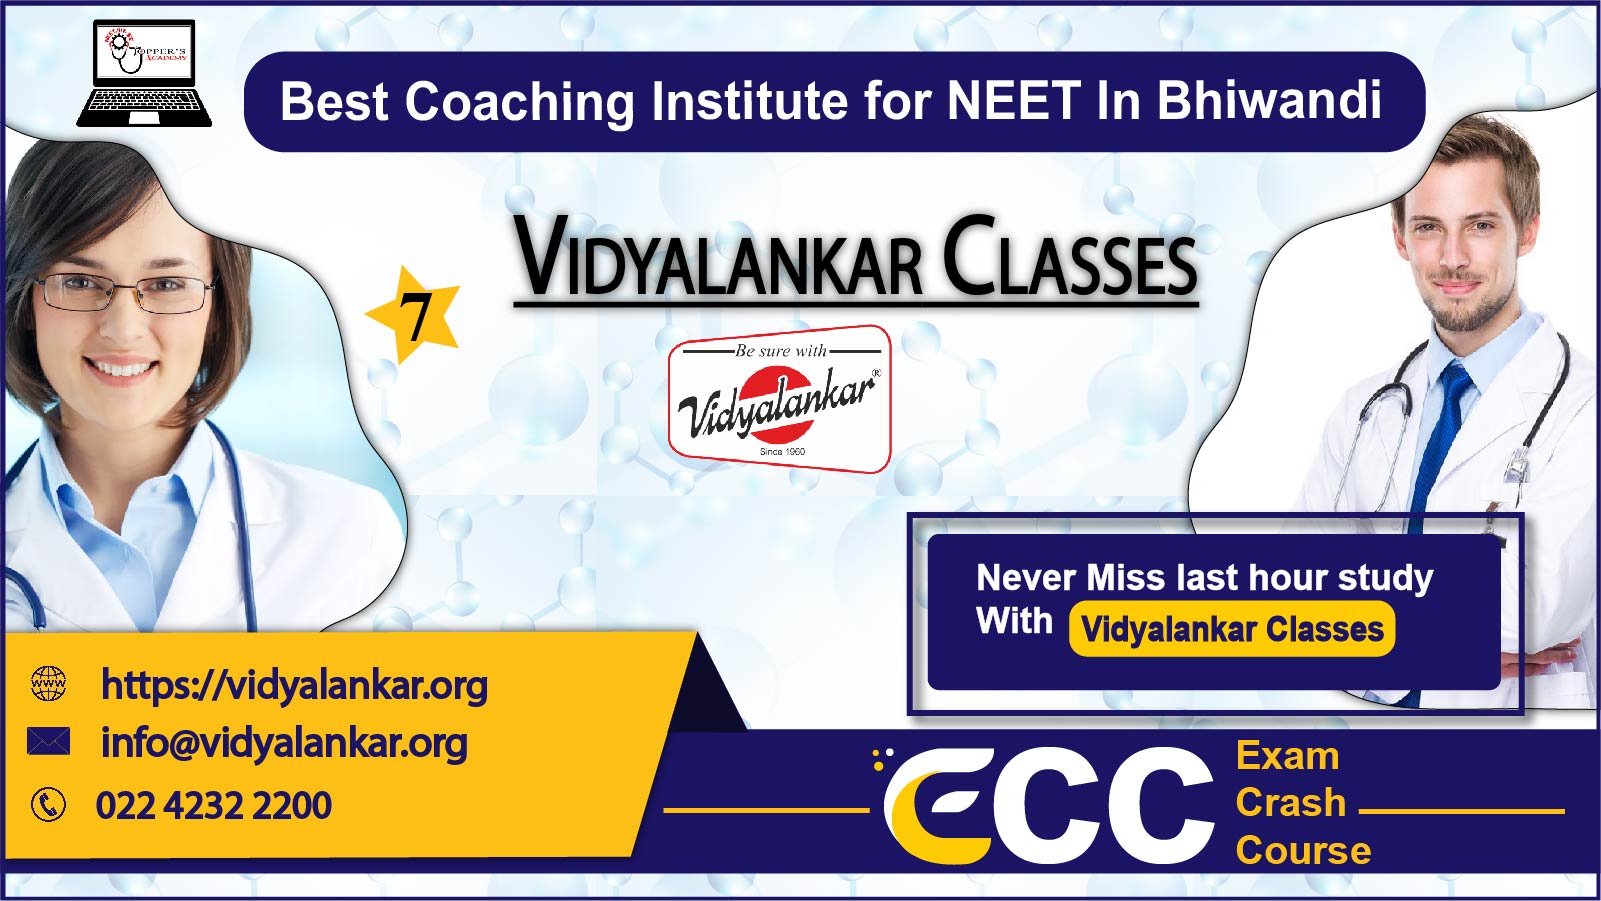 Vidyalankar NEET Coaching in Bhiwandi